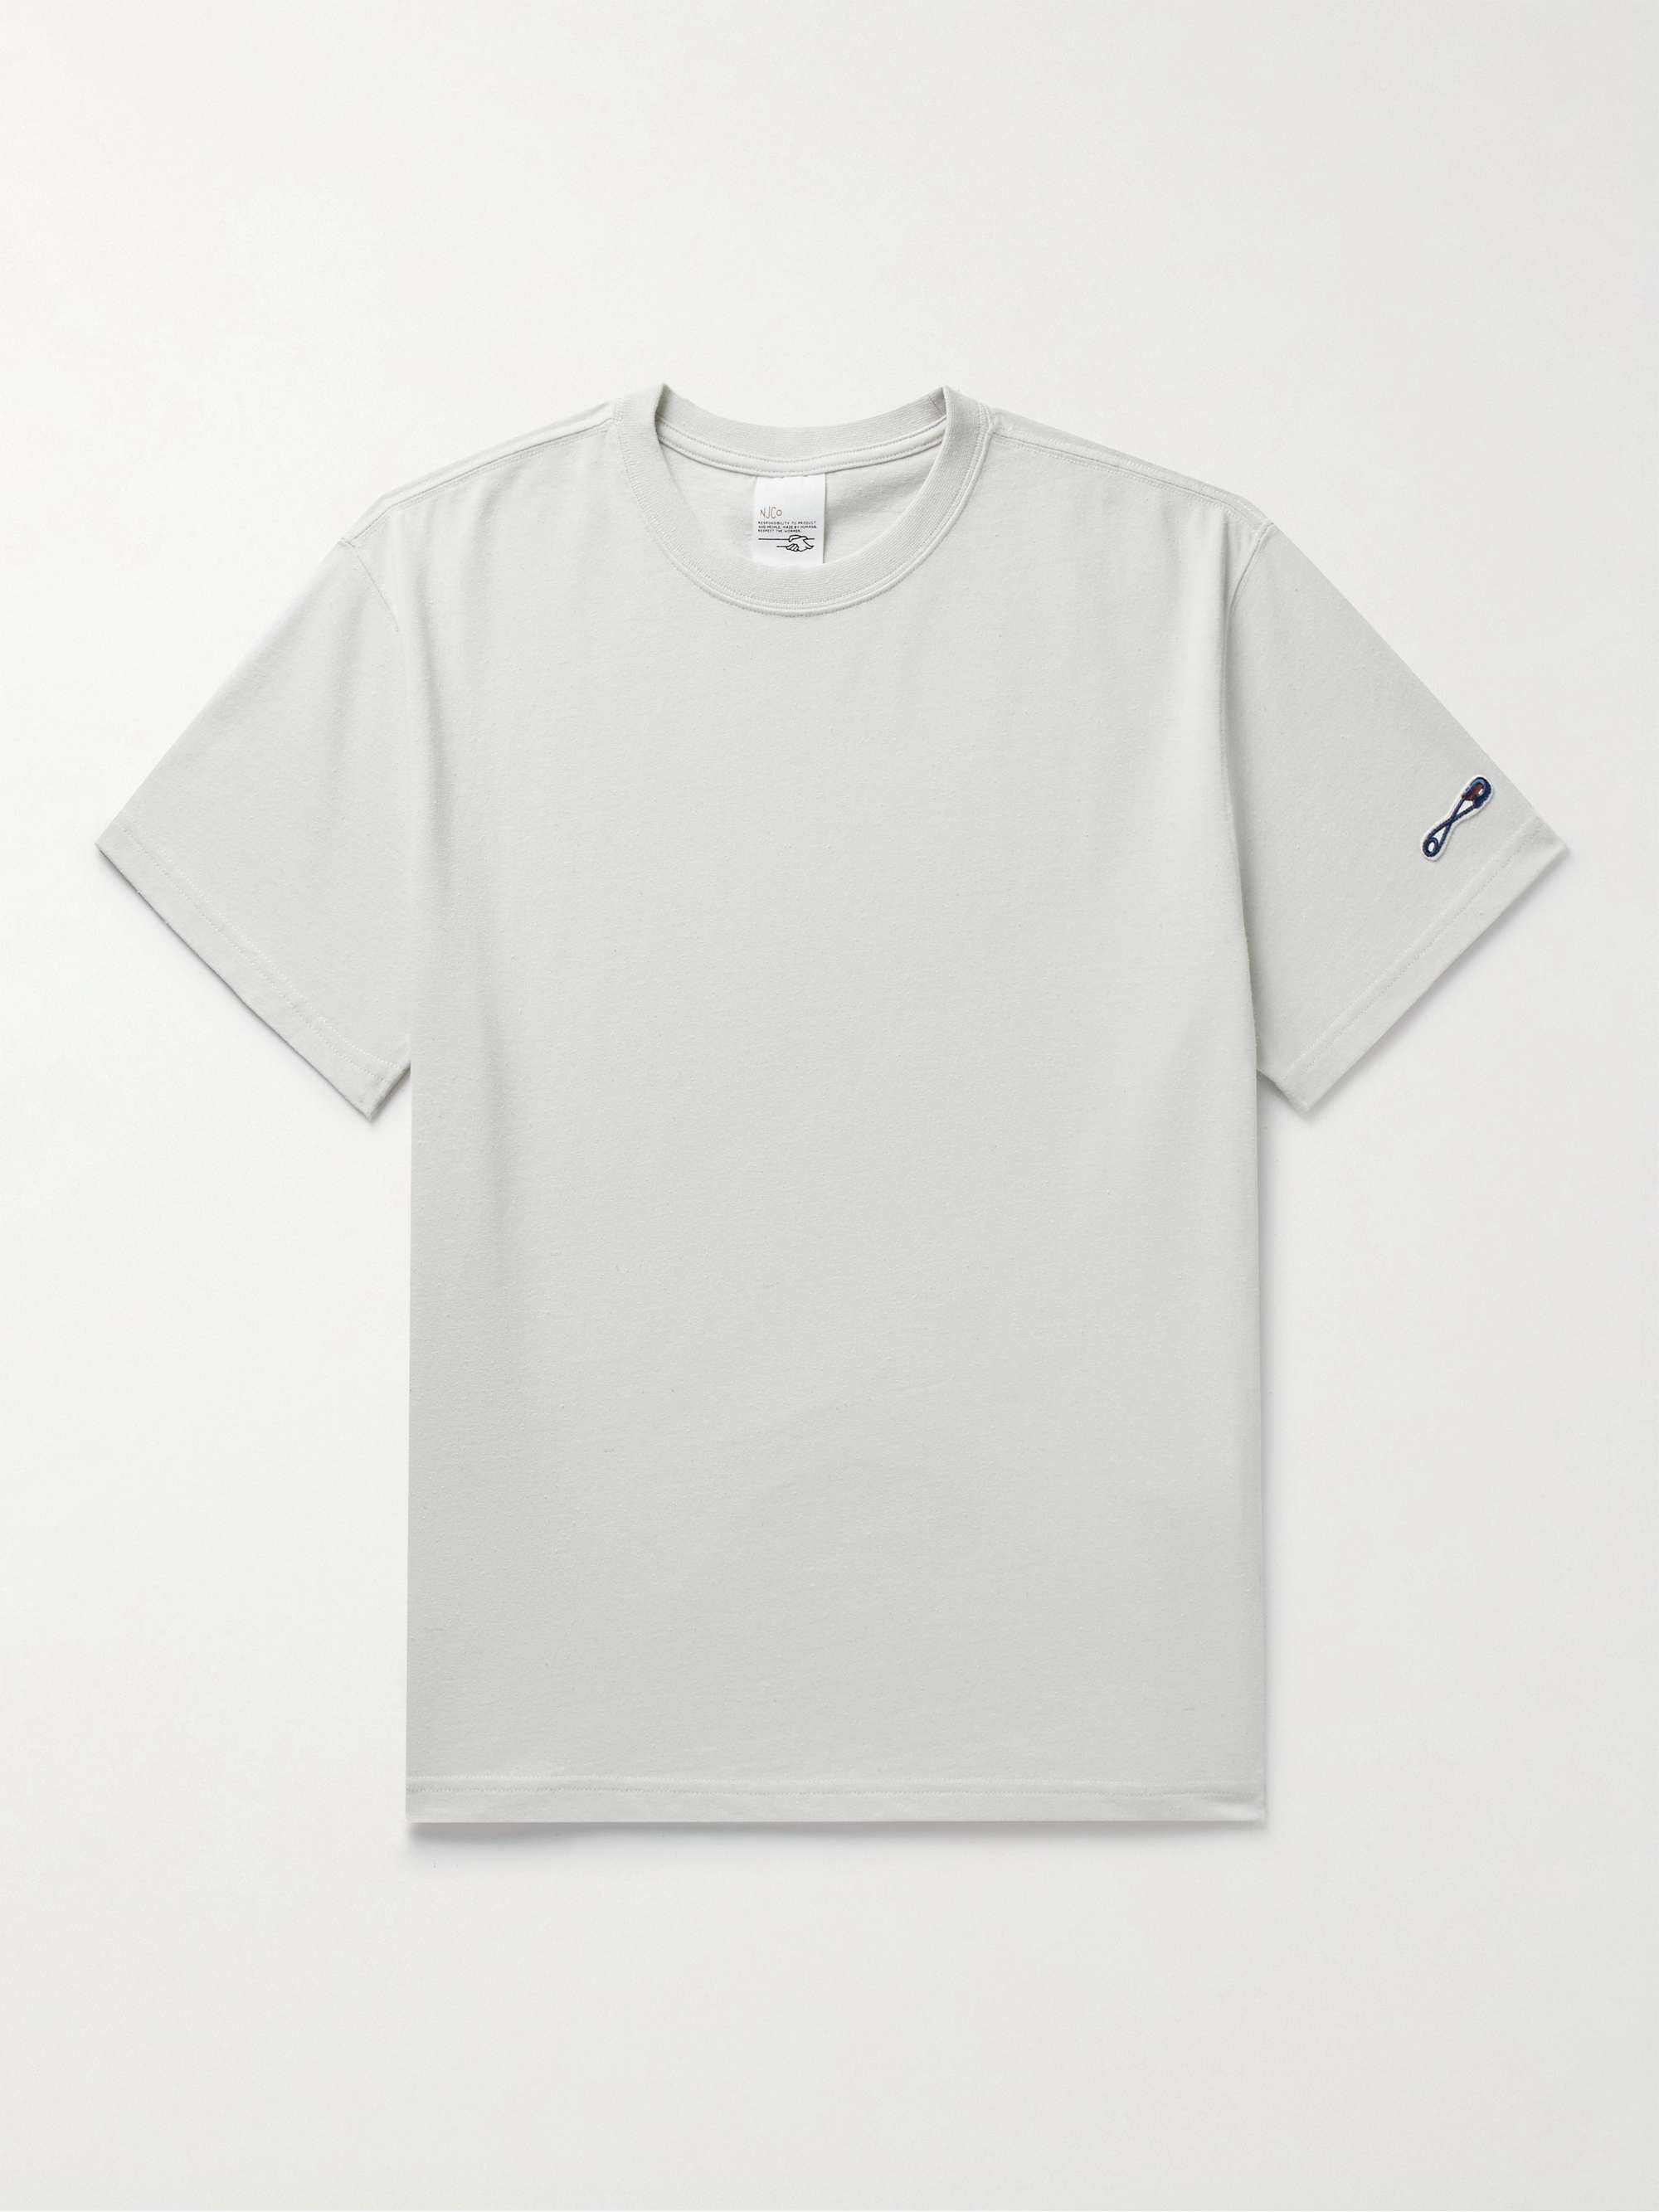 NUDIE JEANS Logo-Appliquéd Cotton-Blend Jersey T-Shirt | MR PORTER